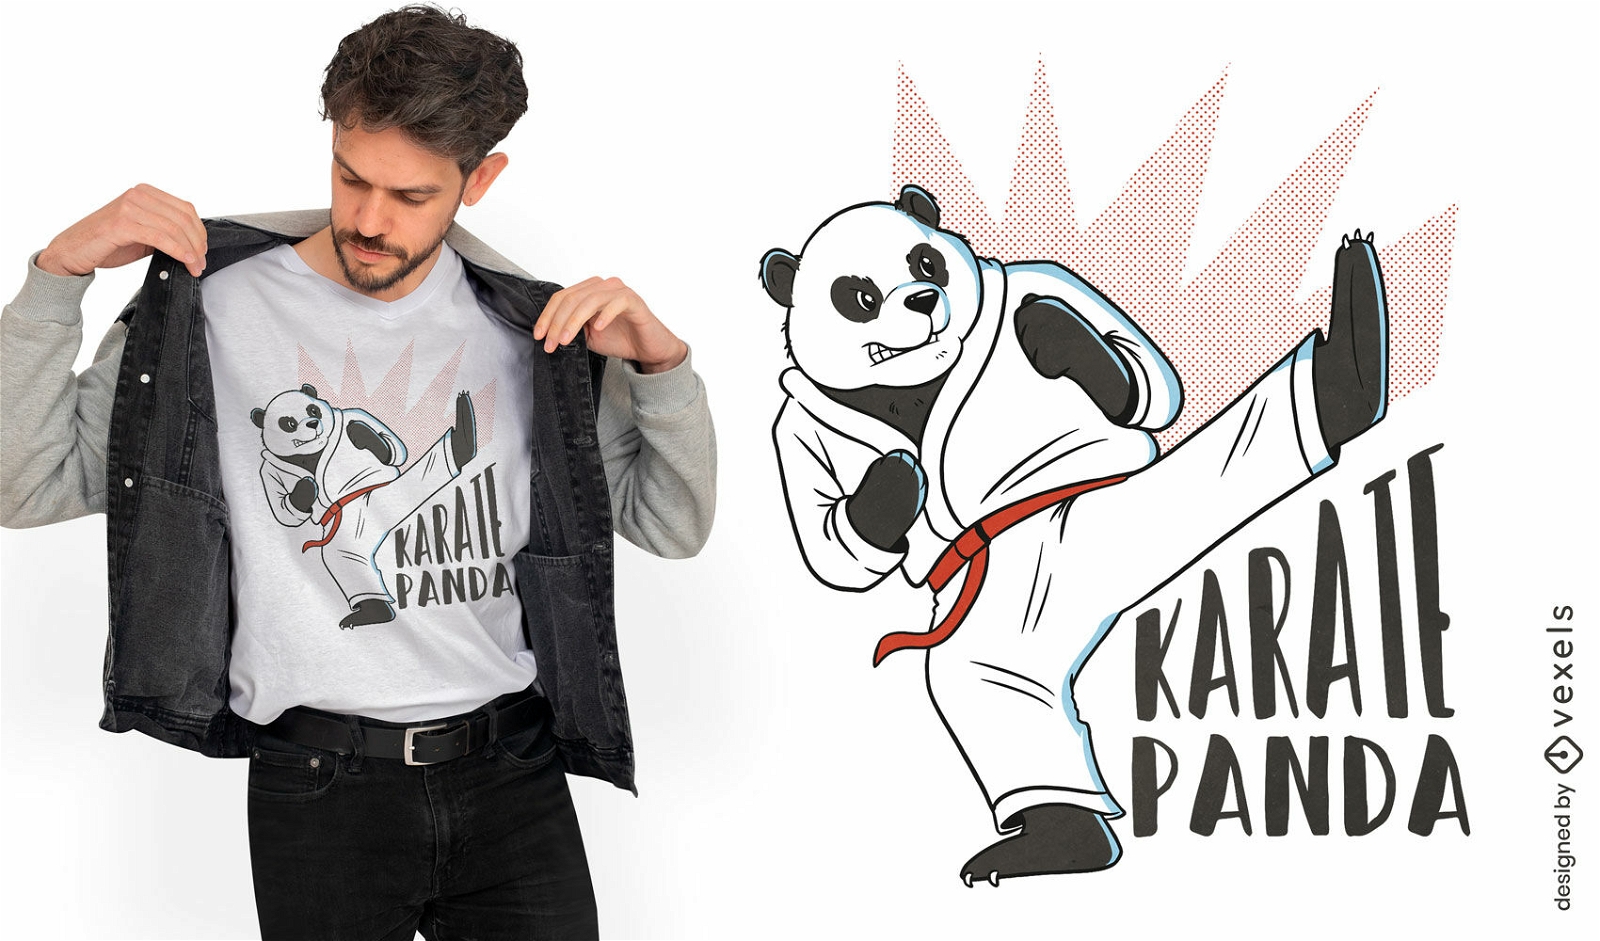 Dise?o de camiseta de dibujos animados de panda de karate